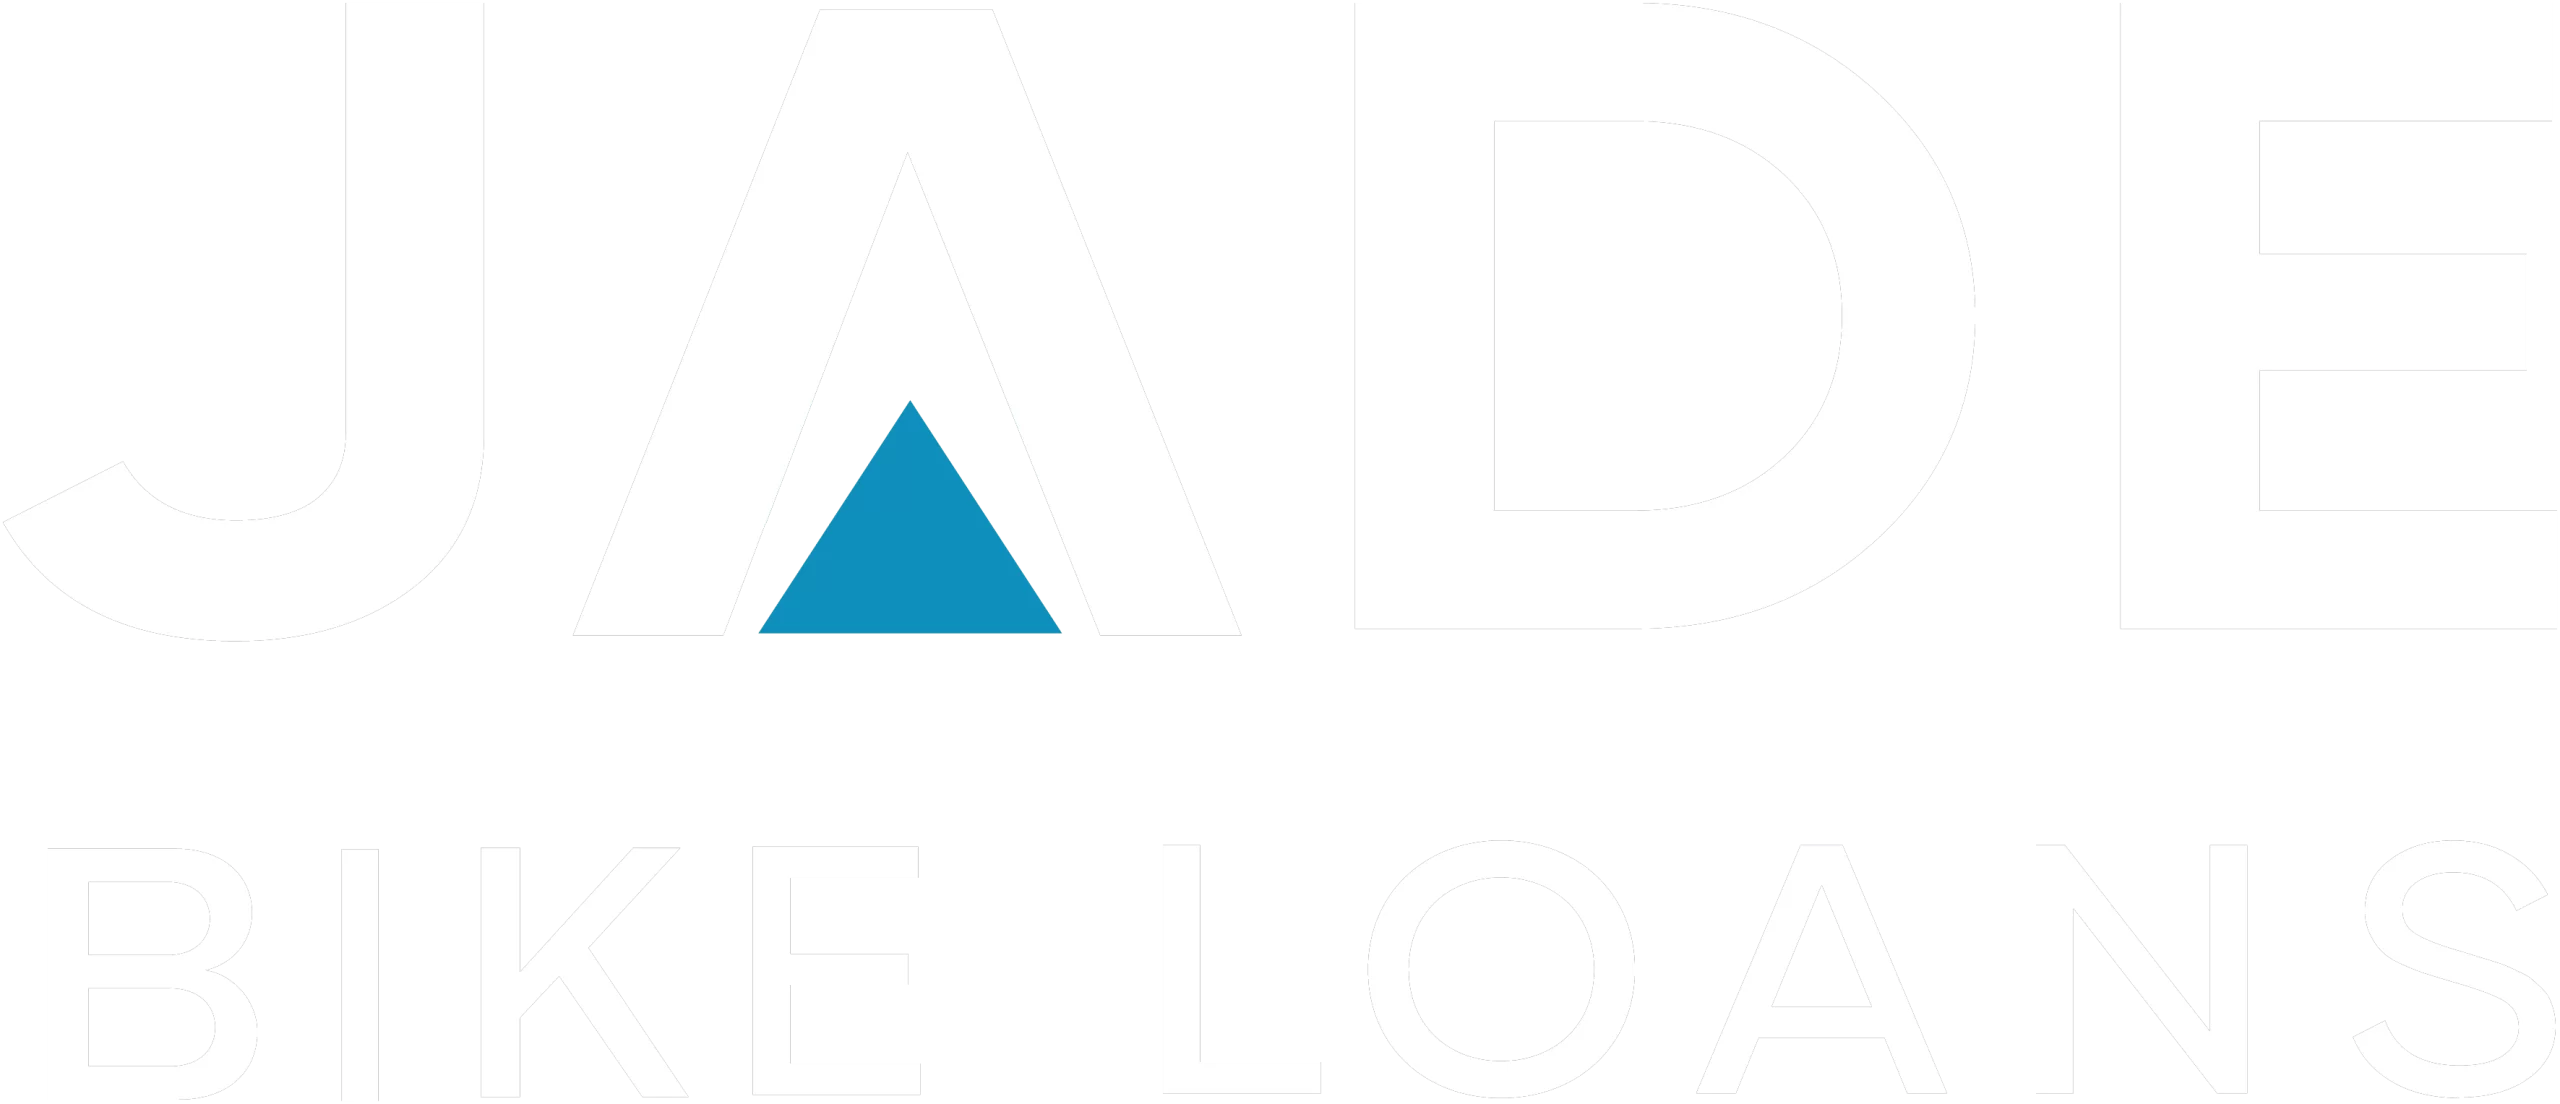 Jade Bike Loans Logo White